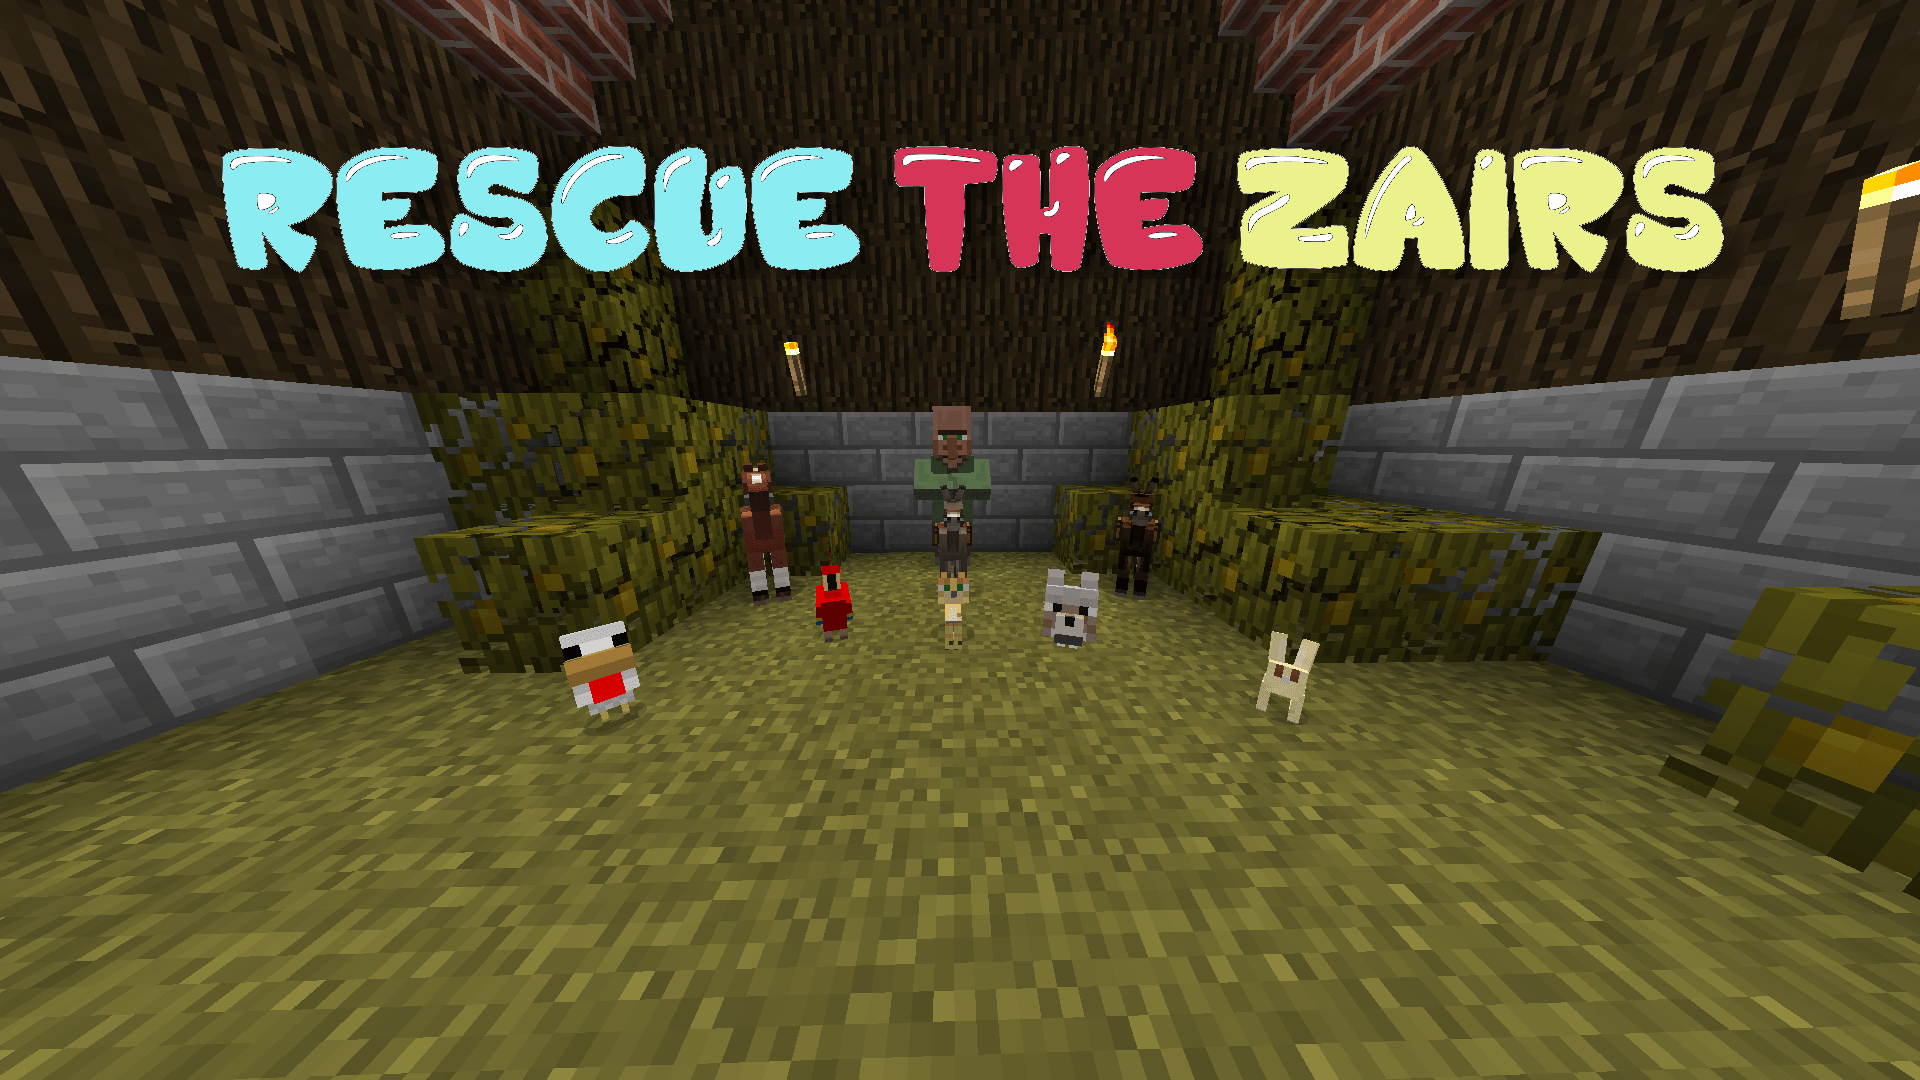 Unduh Rescue The Zairs untuk Minecraft 1.13.2